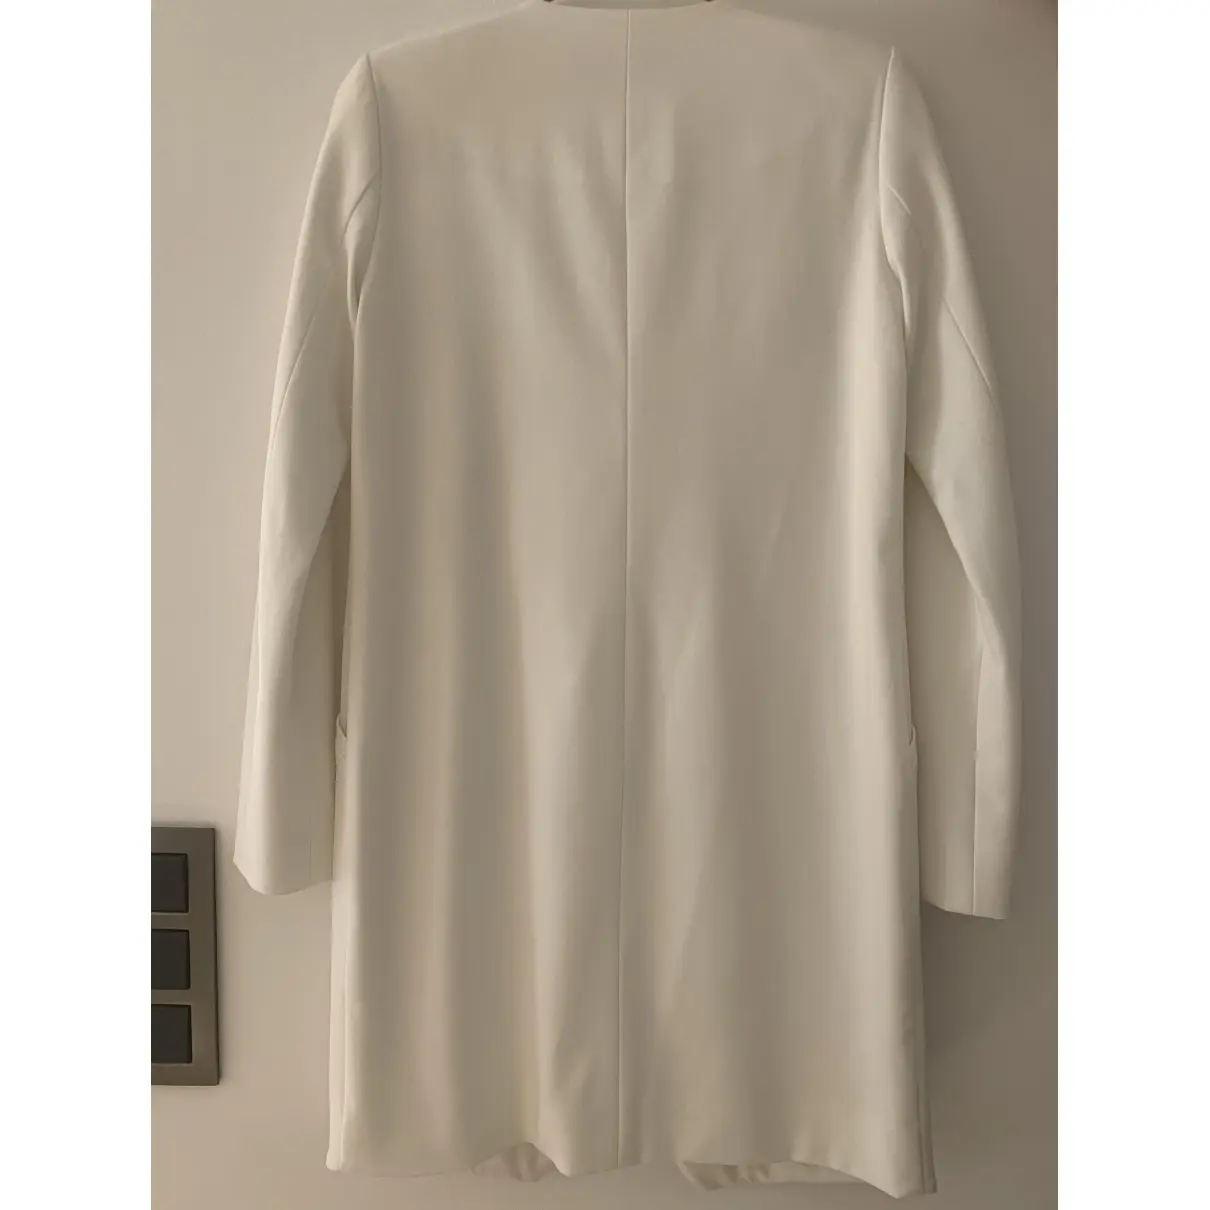 Buy Mason by Michelle Mason Mini dress online